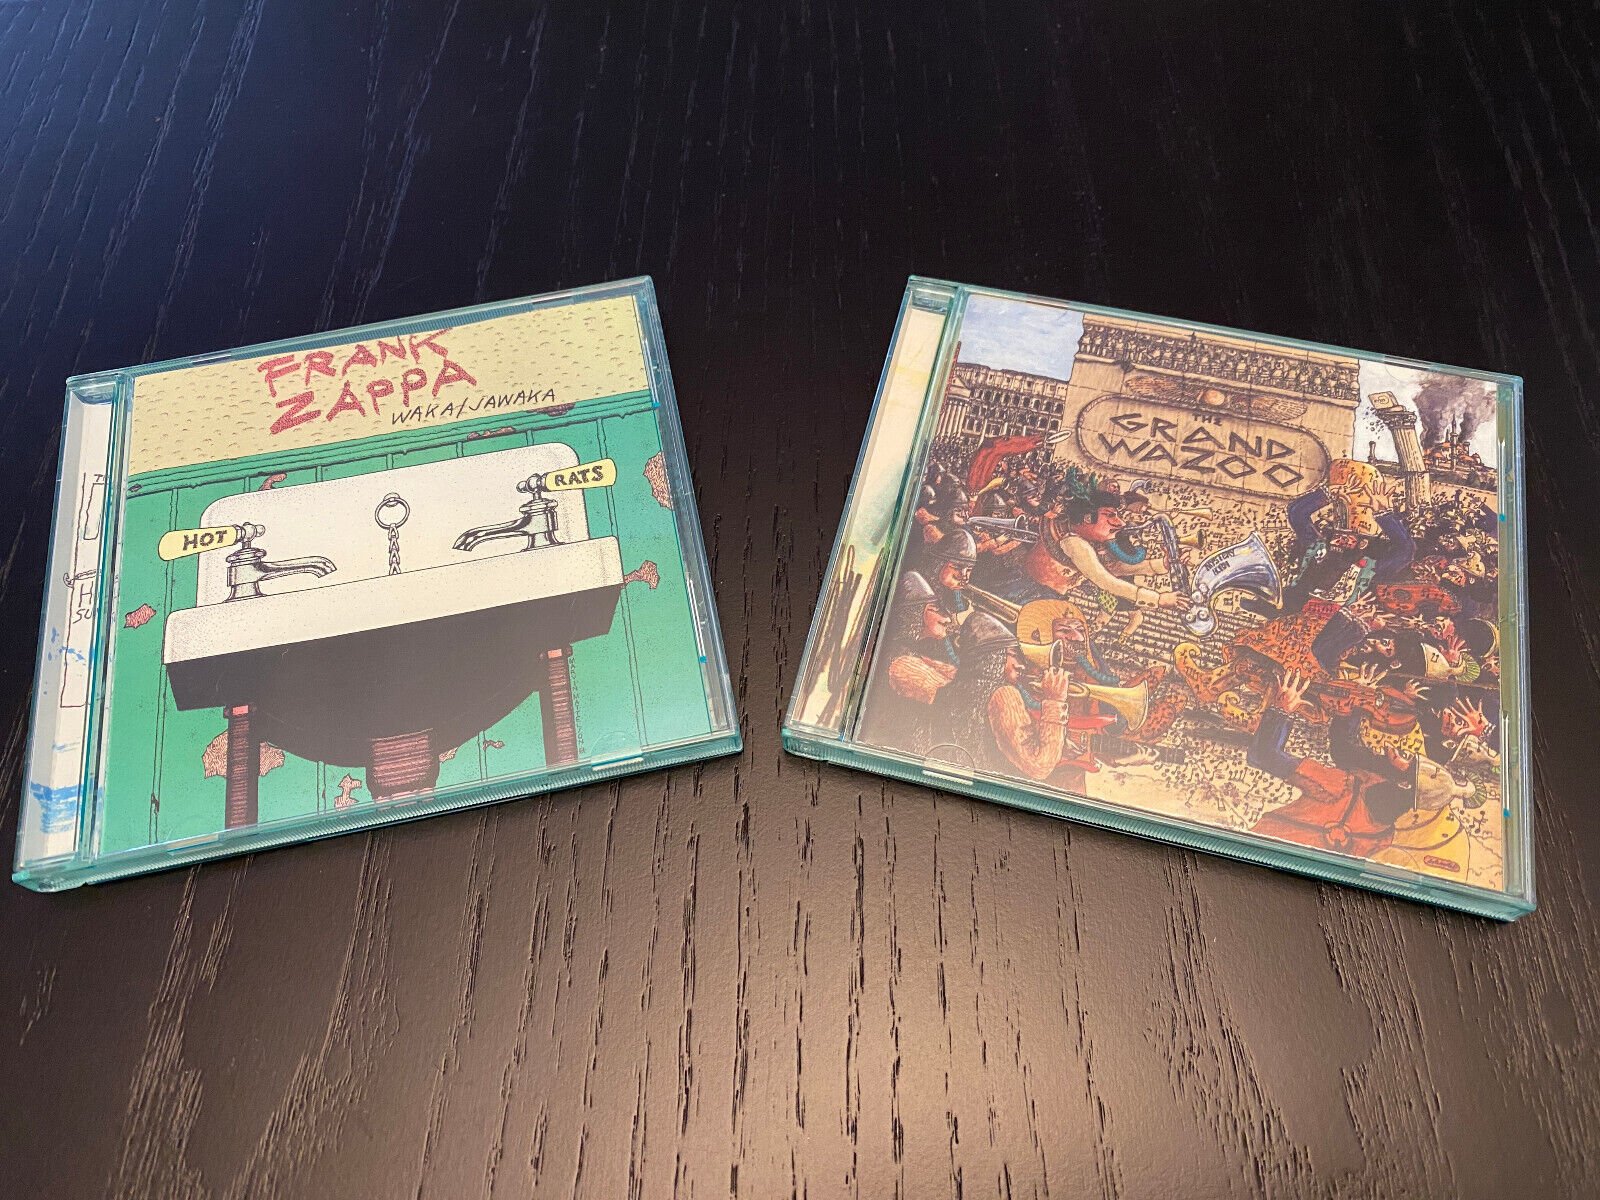 Frank Zappa - Waka/Jawaka & The Grand Wazoo - Pair of Albums on CD